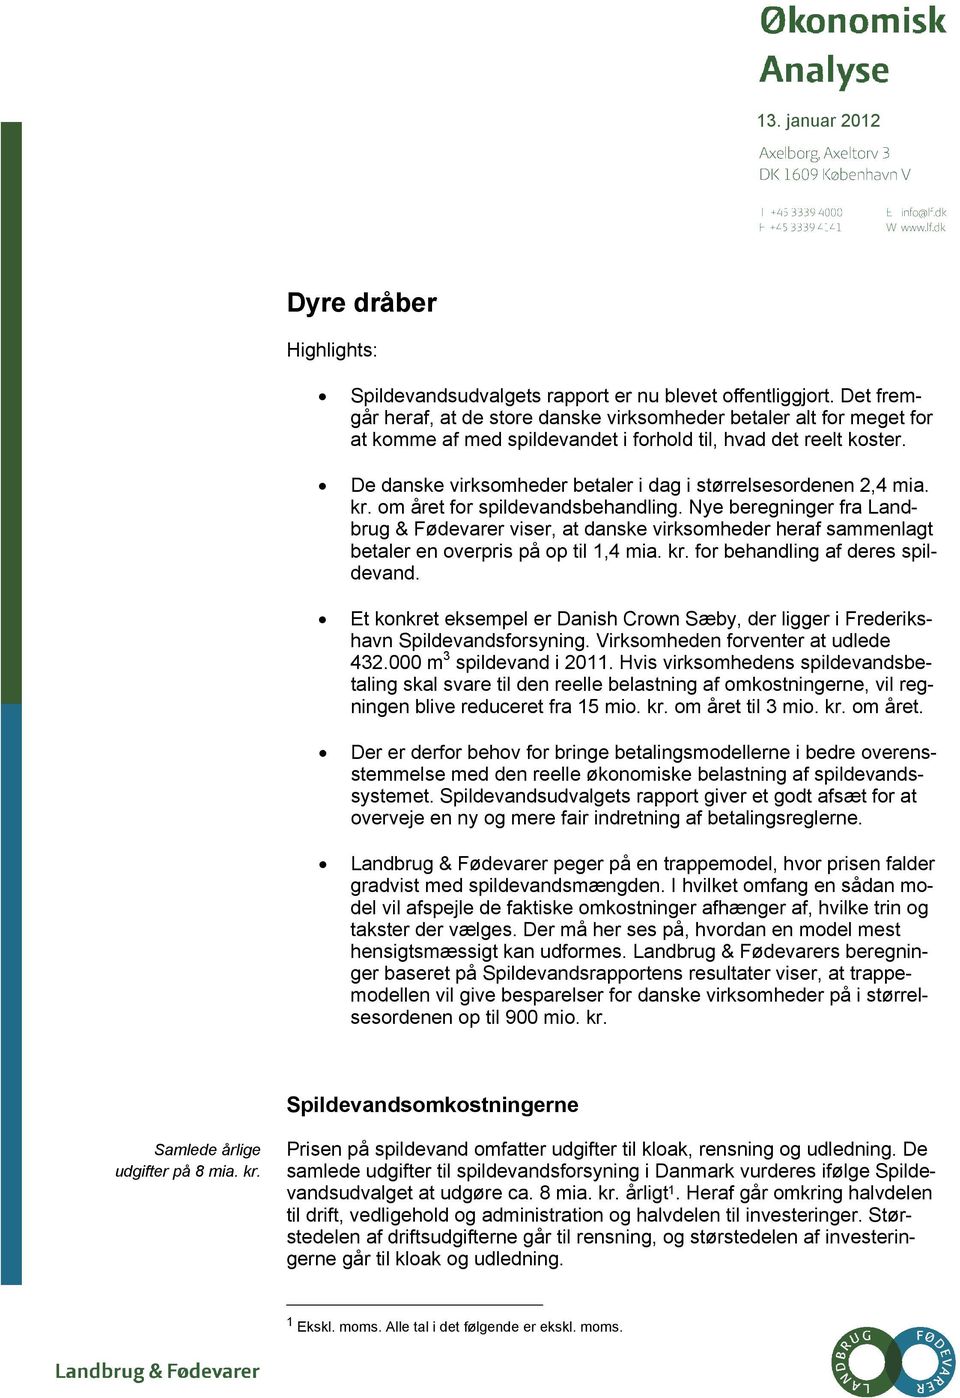 De danske virksomheder betaler i dag i størrelsesordenen 2,4 mia. kr. om året for spildevandsbehandling.